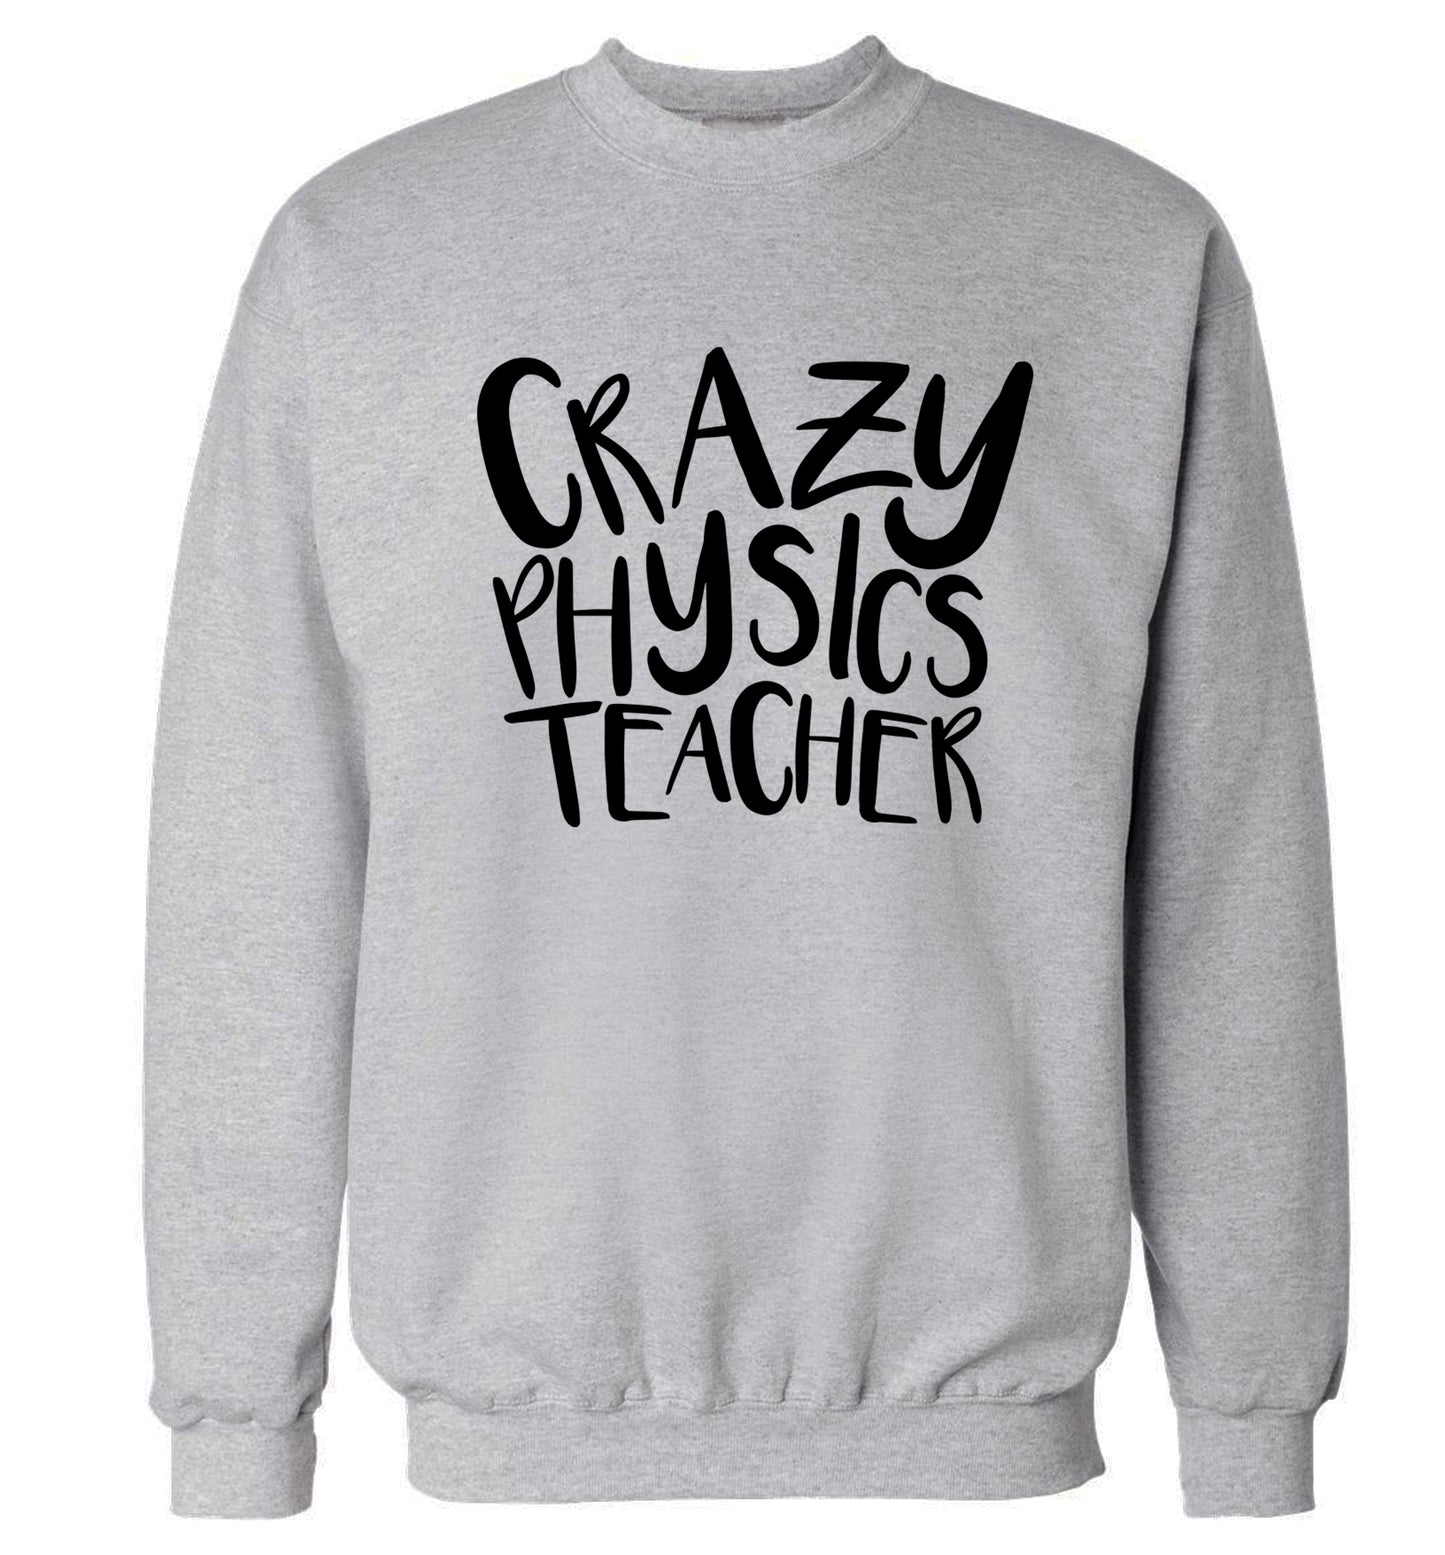 Crazy physics teacher Adult's unisex grey Sweater 2XL